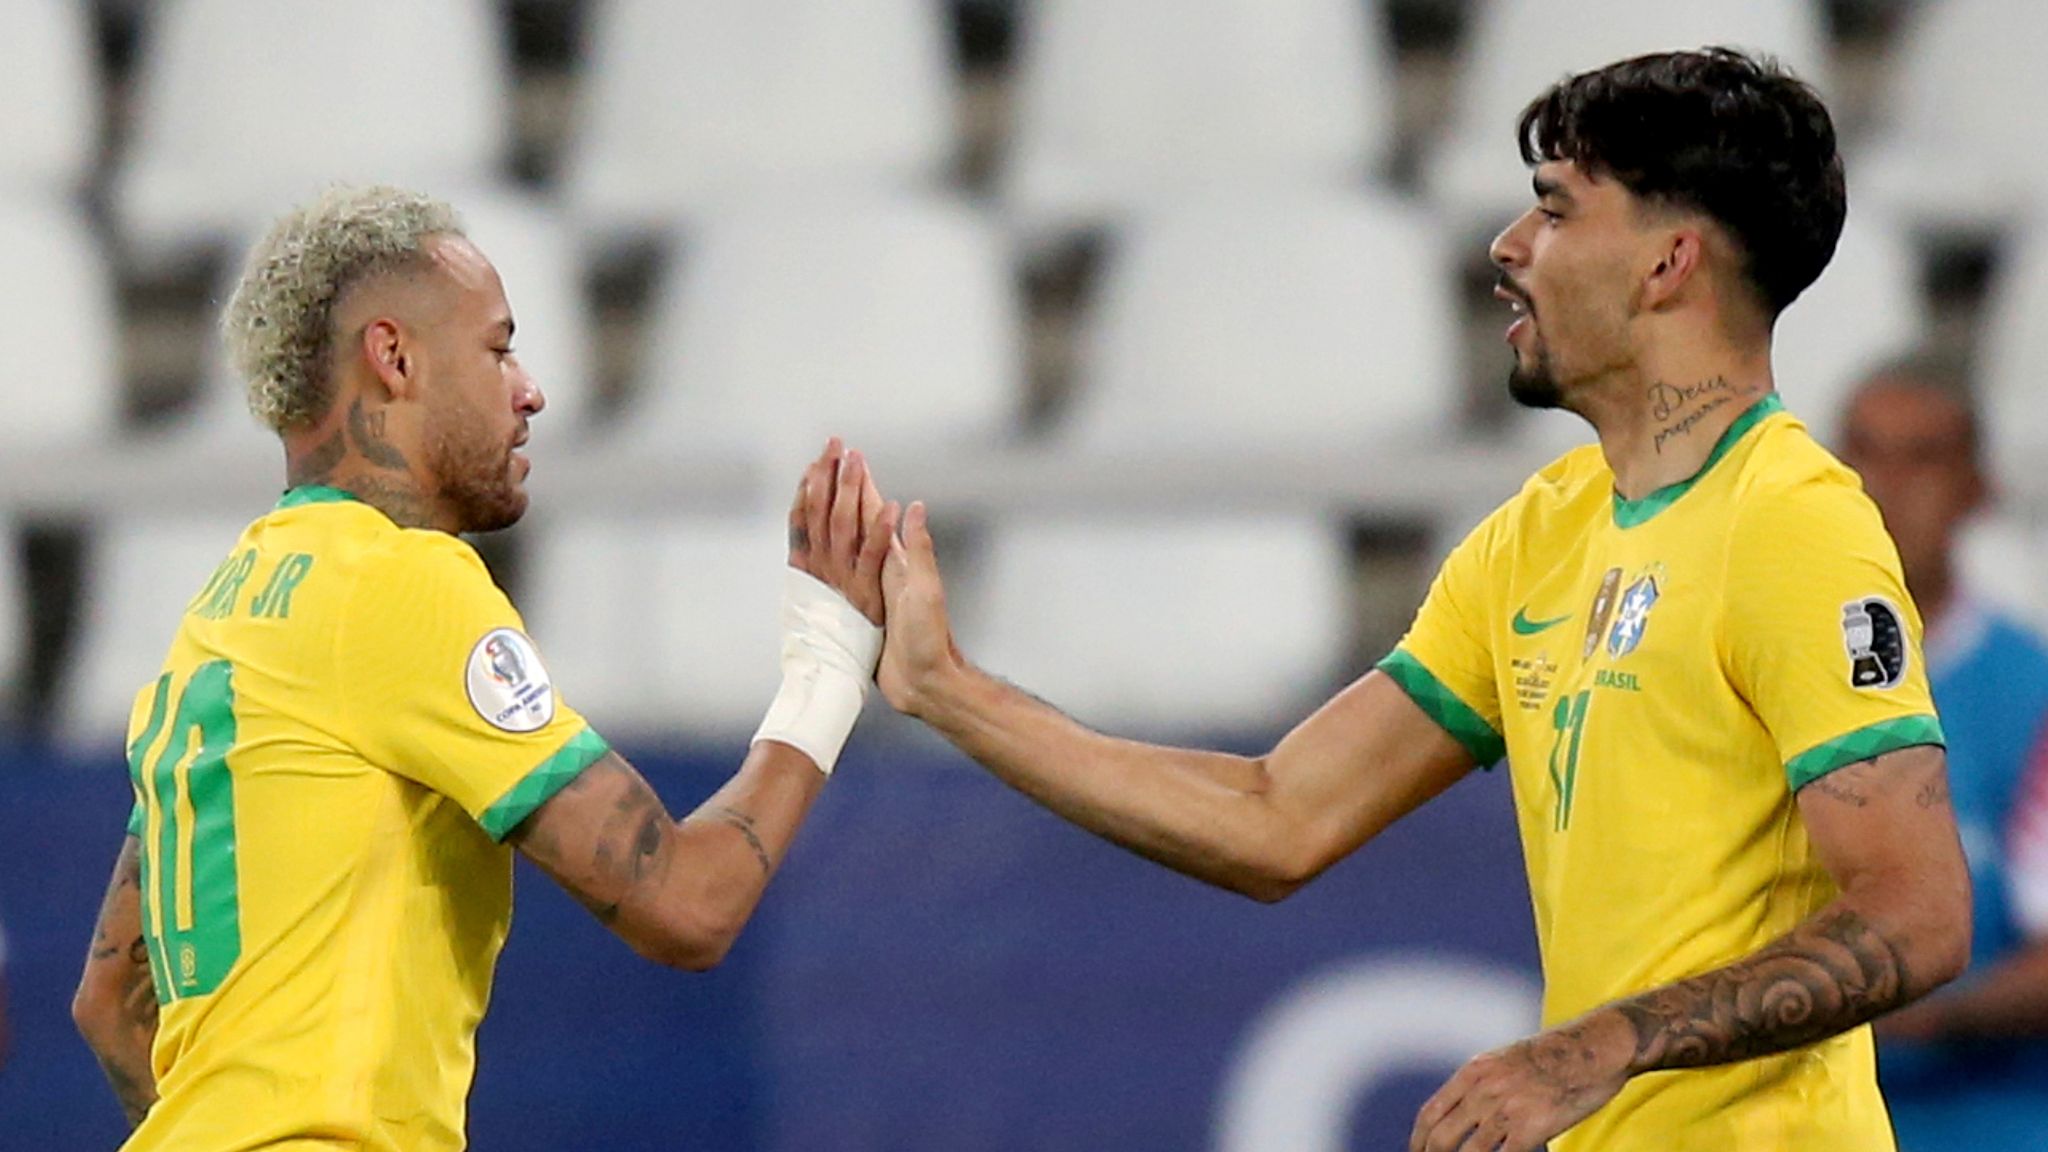 Neymar ready to shine for Brazil against Chile, Bolivia: Lucas Paqueta